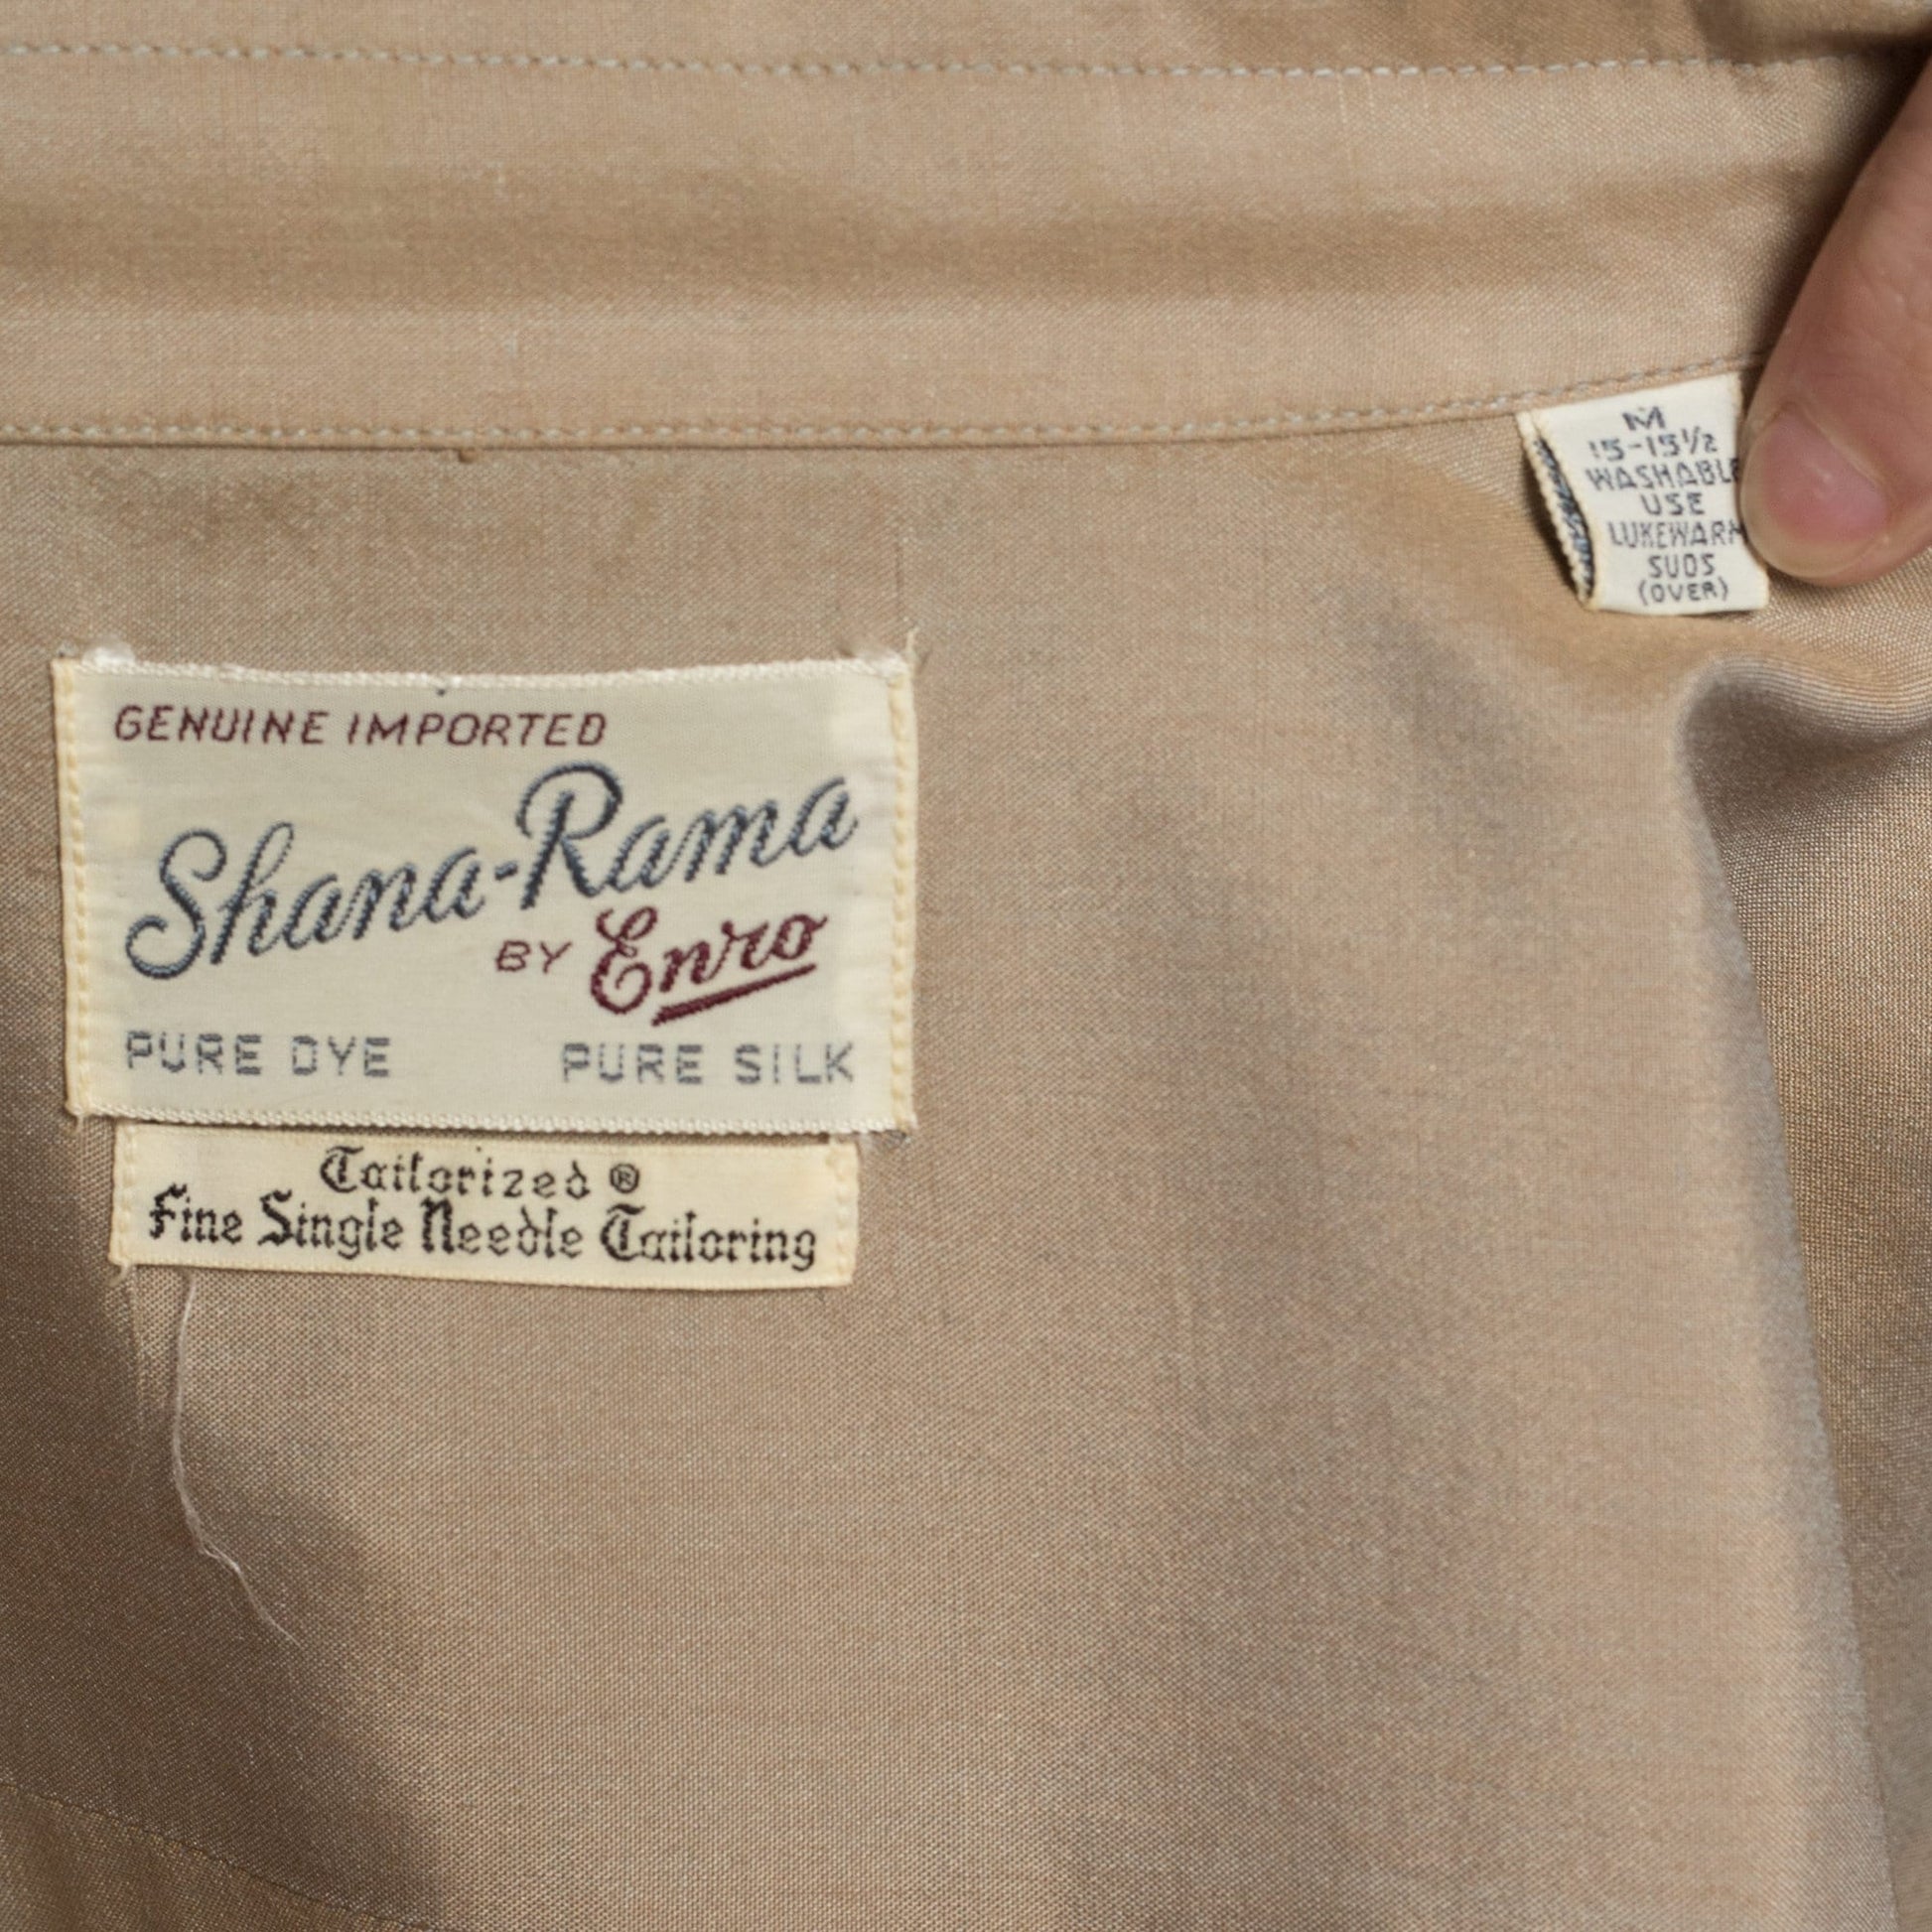 Medium 60s 70s Taupe Silk Loop Collar Shirt | Vintage Button Up Long Sleeve Top